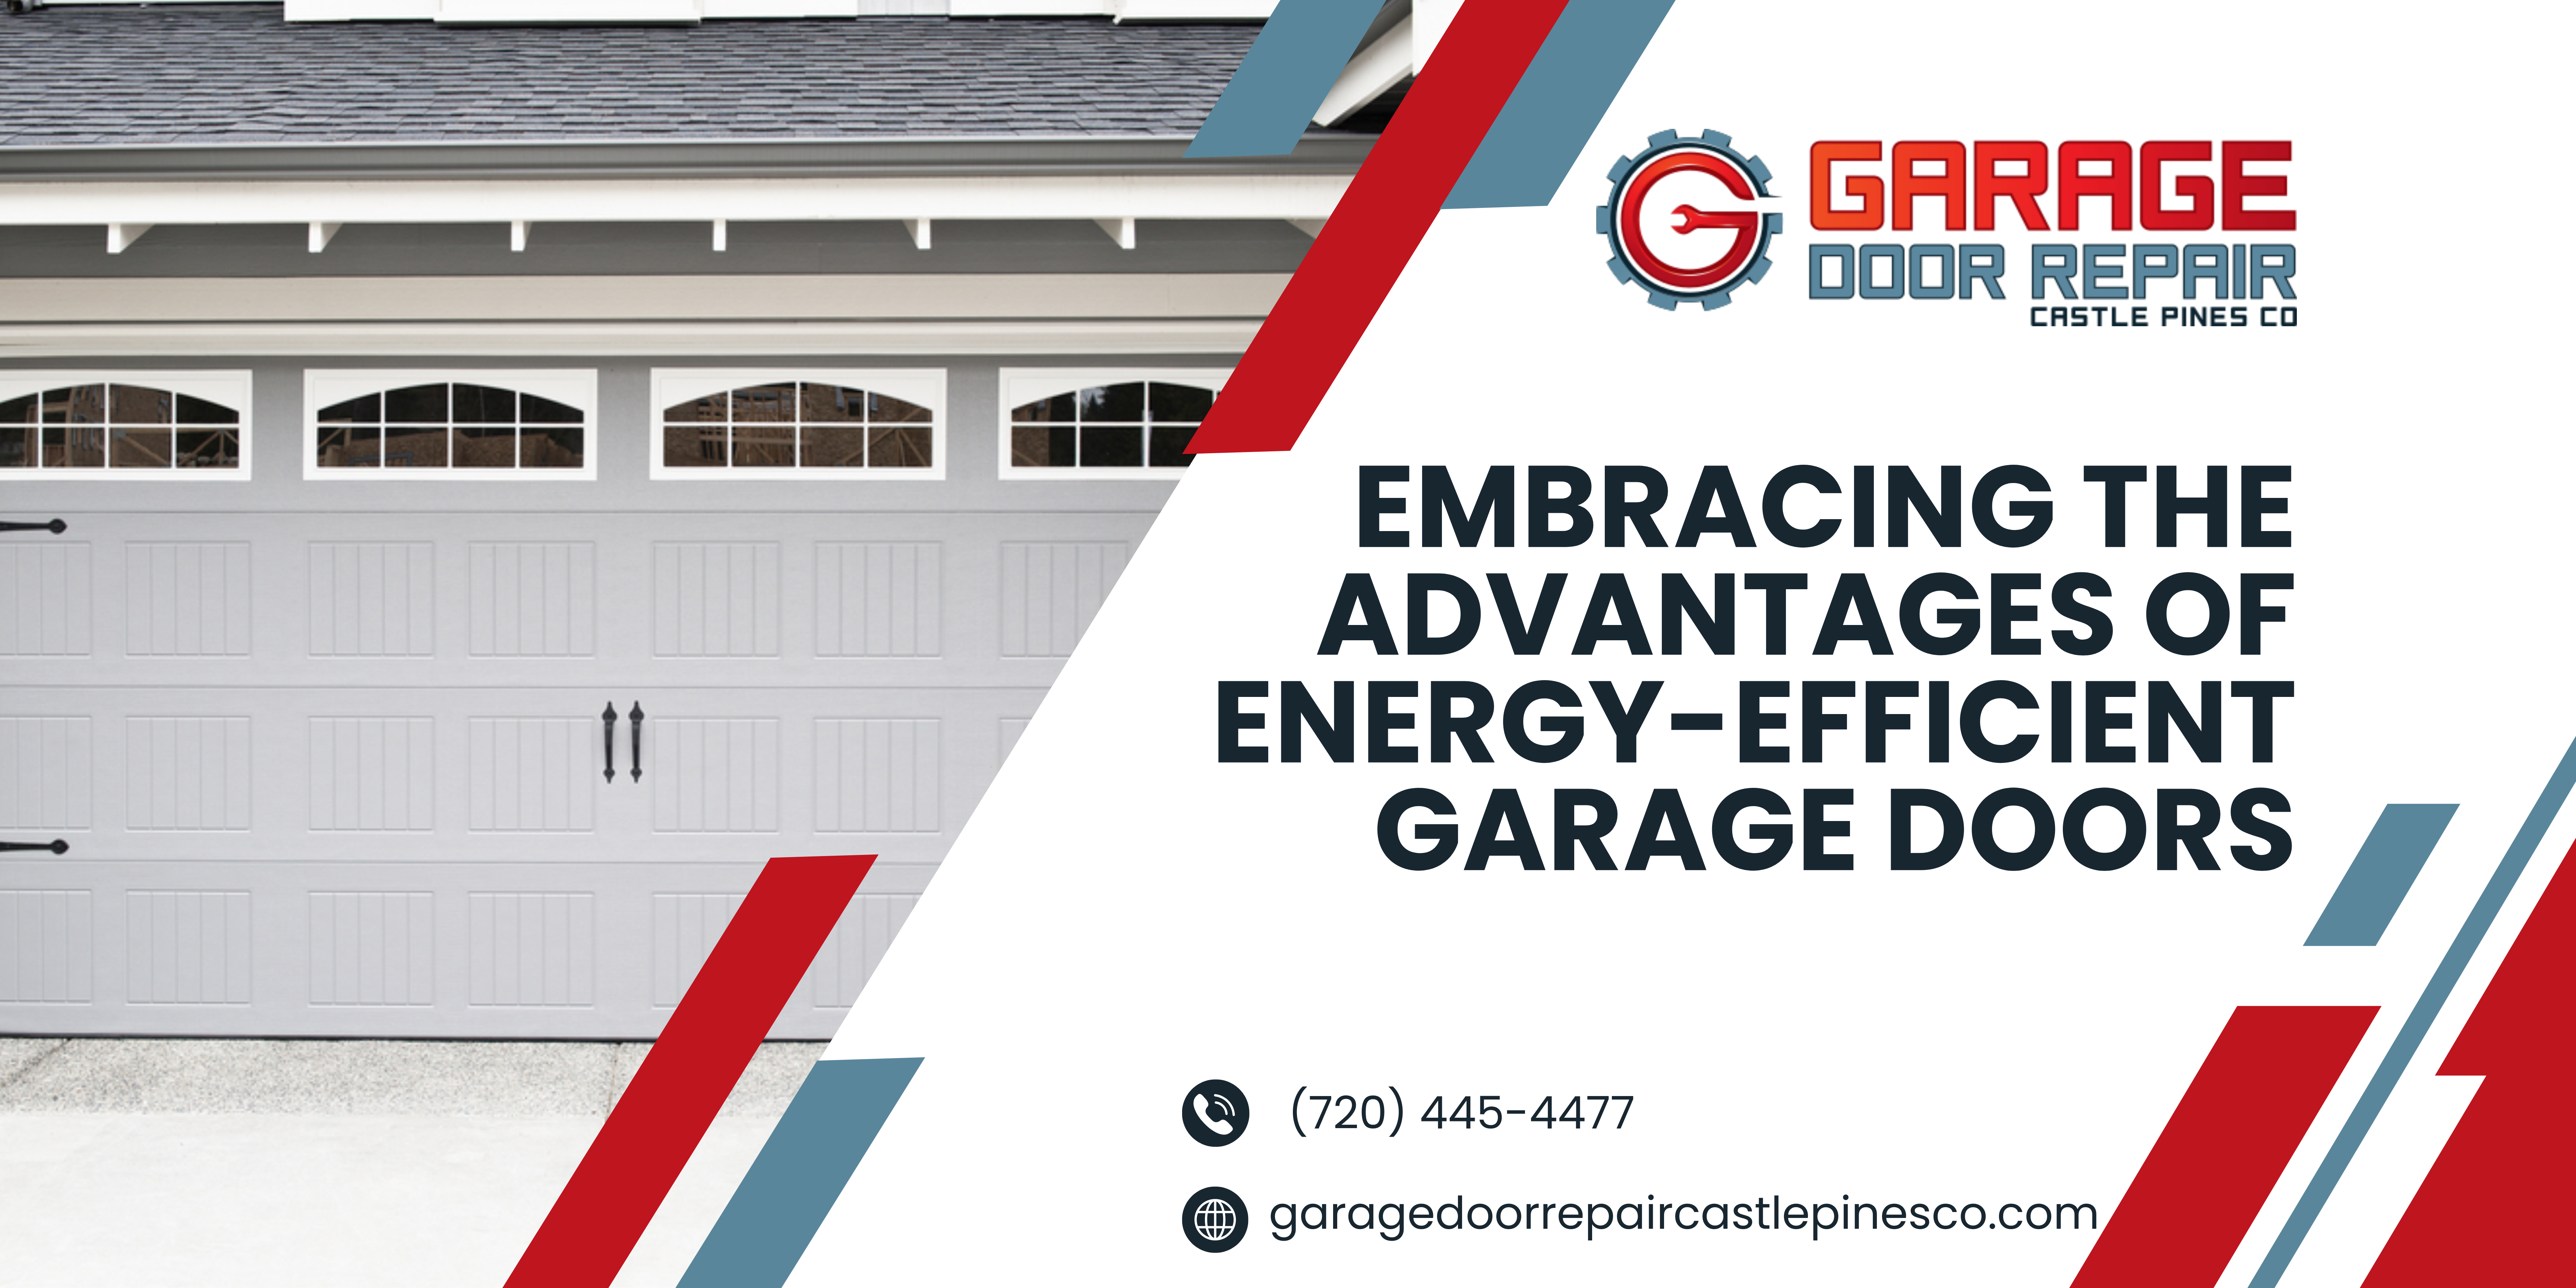 Embracing the Advantages of Energy-Efficient Garage Doors